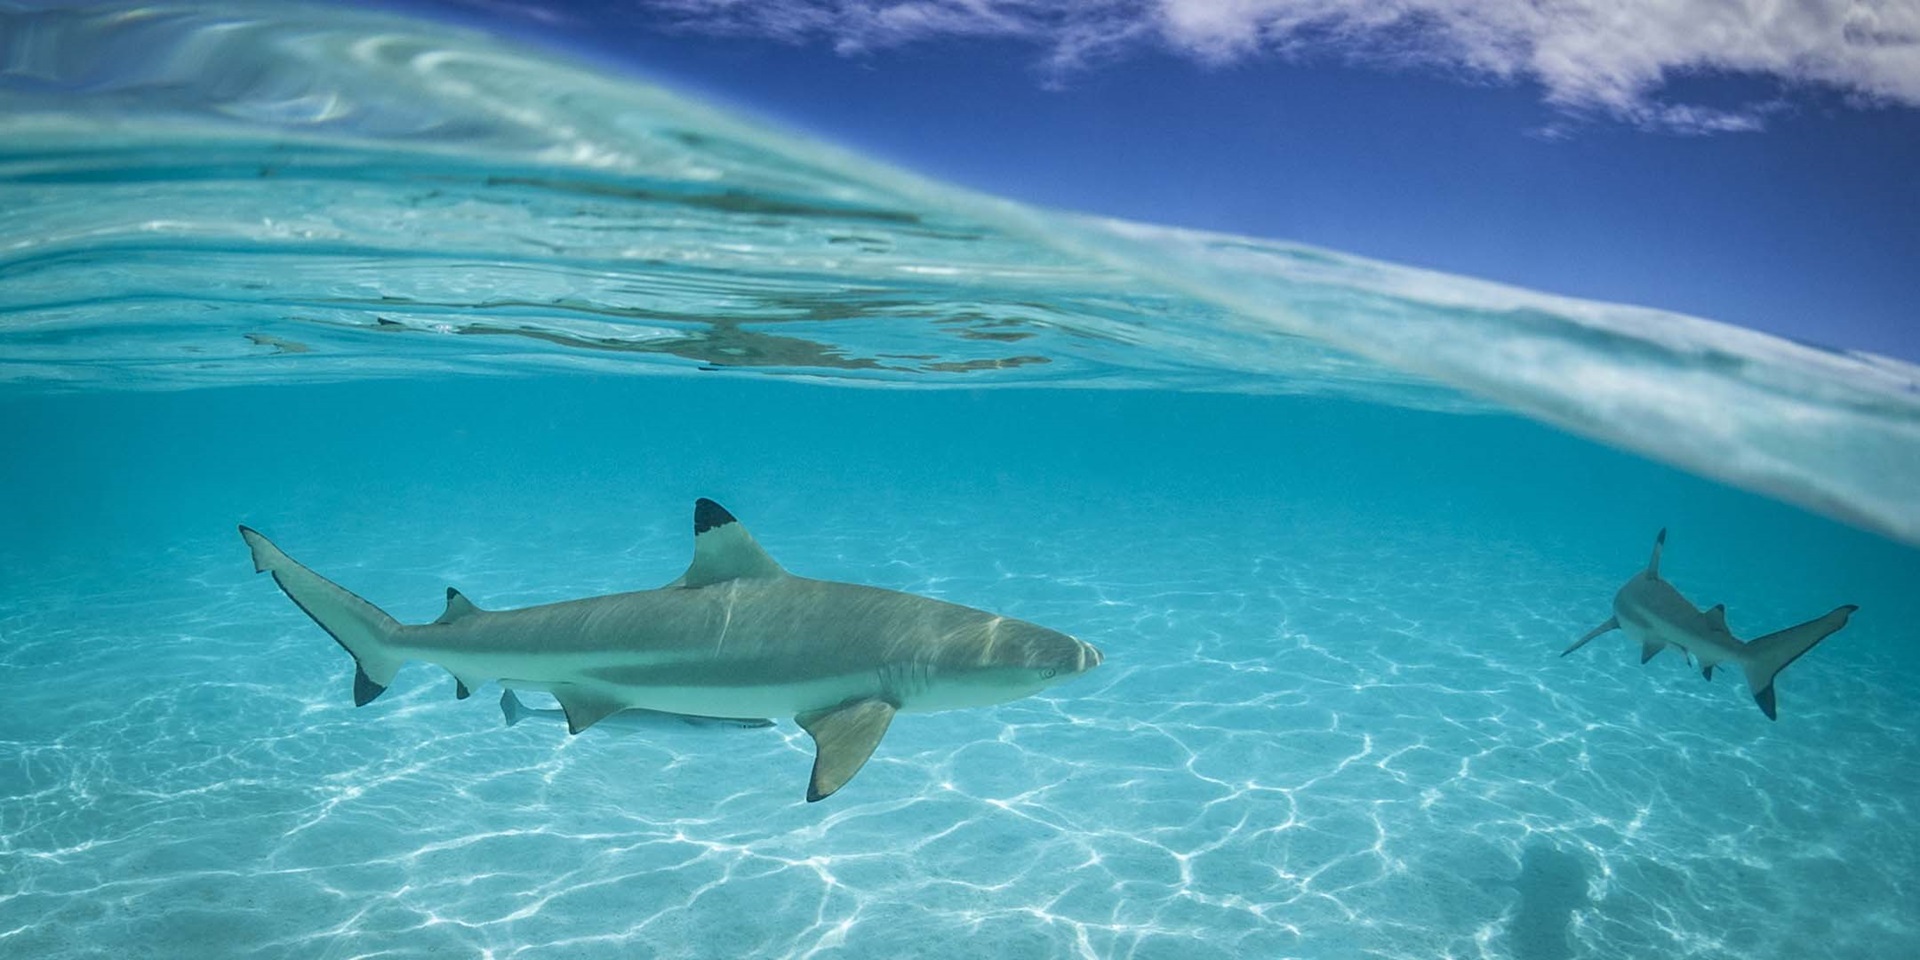 Black tip reef shark. Image: Global_Pics/iStock.